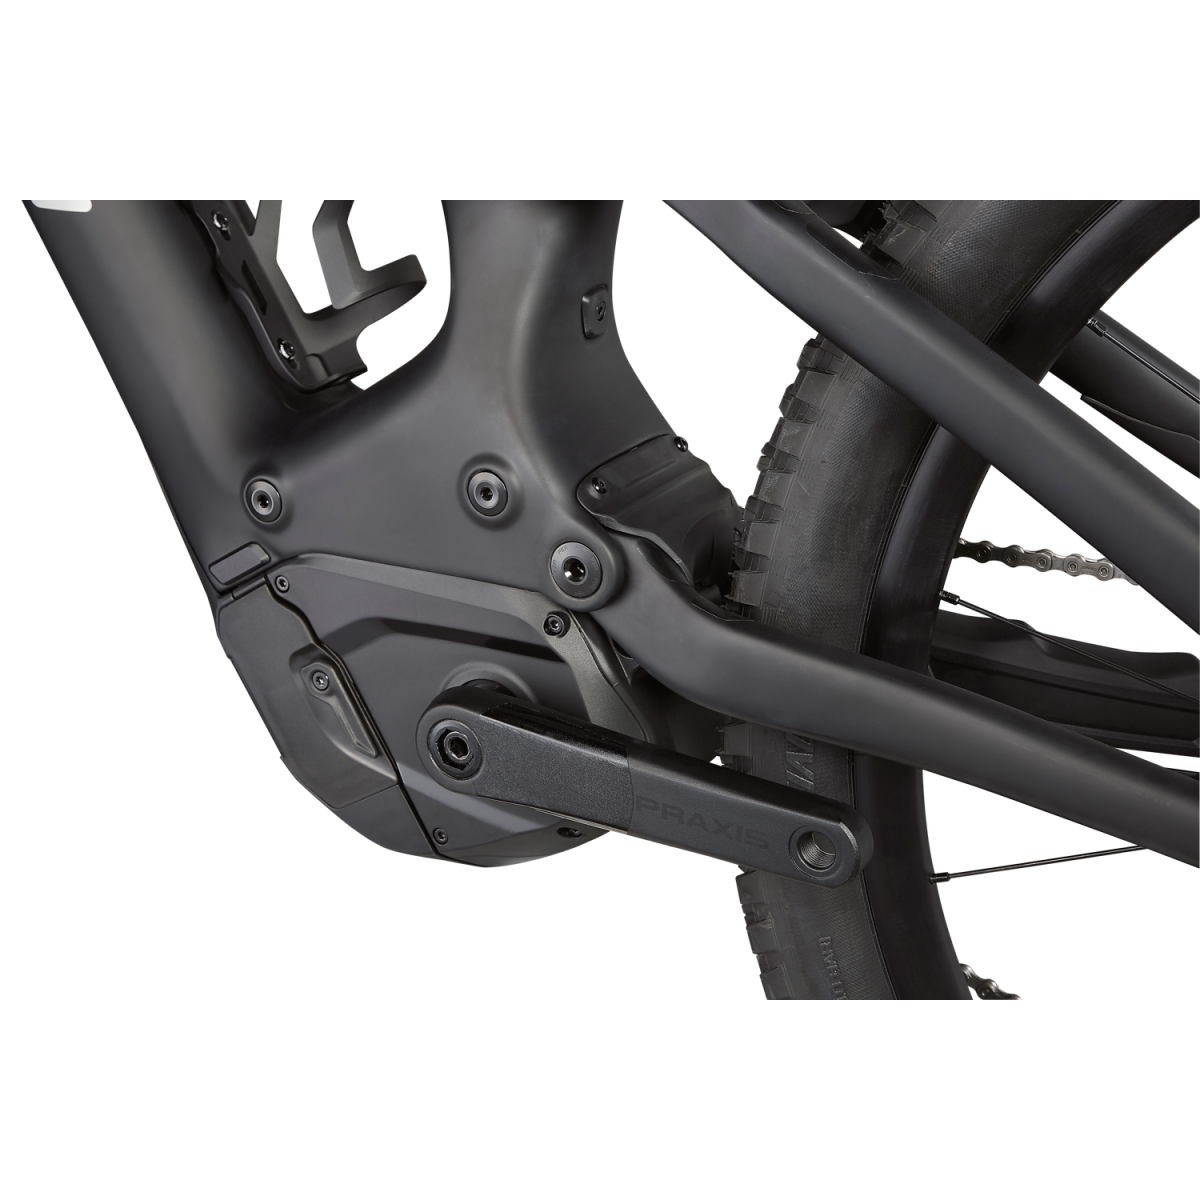 Specialized Turbo Levo Comp Carbon elektrinis dviratis / Satin Black - Light Silver